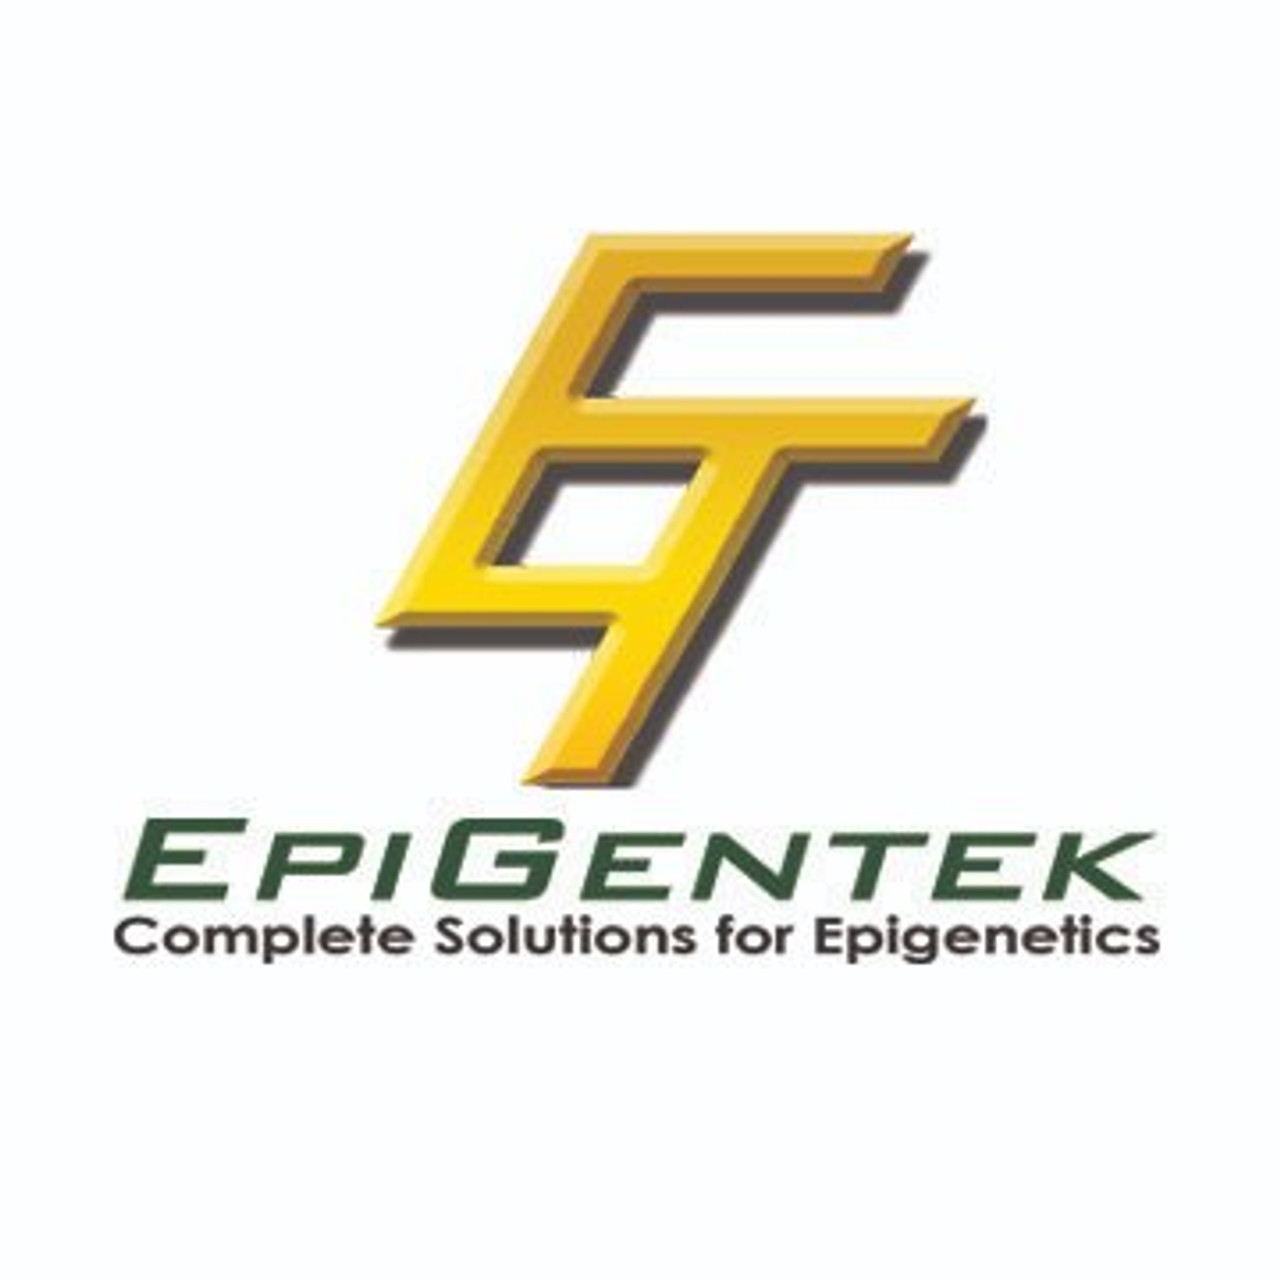 QuantiSir Specific Gene Knockdown Quantification Kit For Epigenetic Regulators - HDAC7